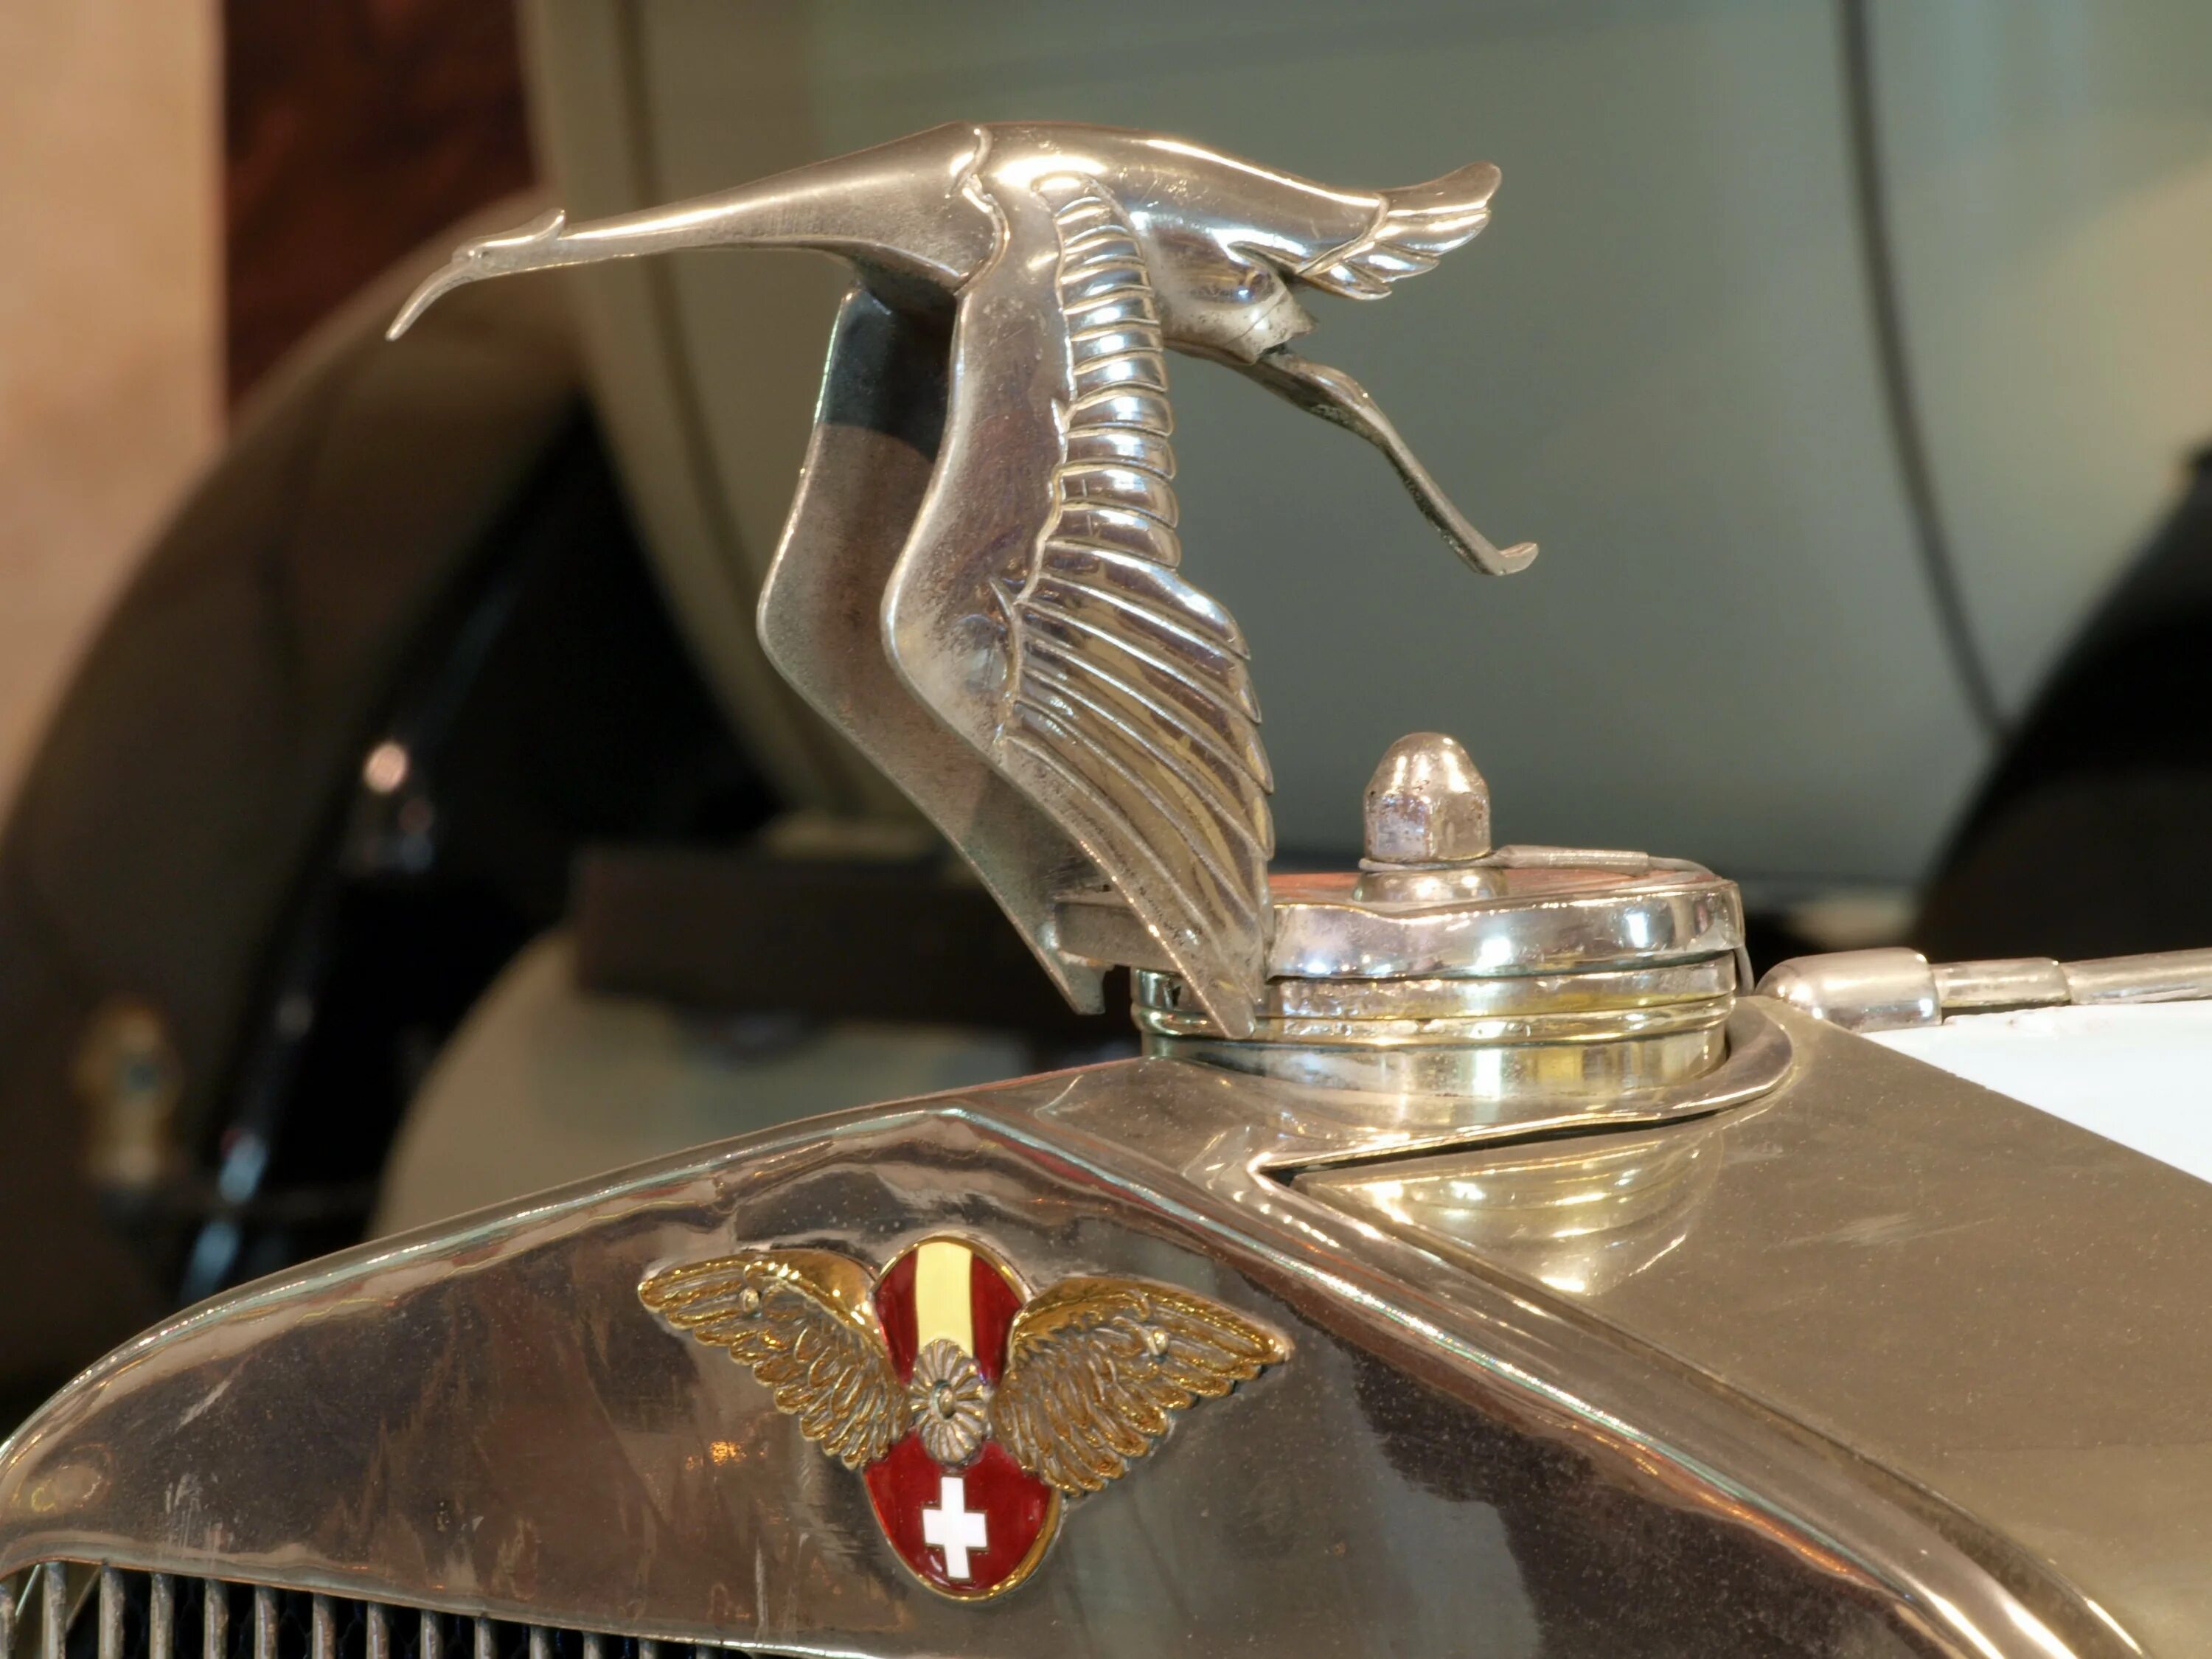 Орел на капот. Hyundai Equus с птичкой на капоте. Hispano-Suiza h6b million-Guiet Dual-Cowl Phaeton (1924). Машина с крыльями. Крыло автомобиля.